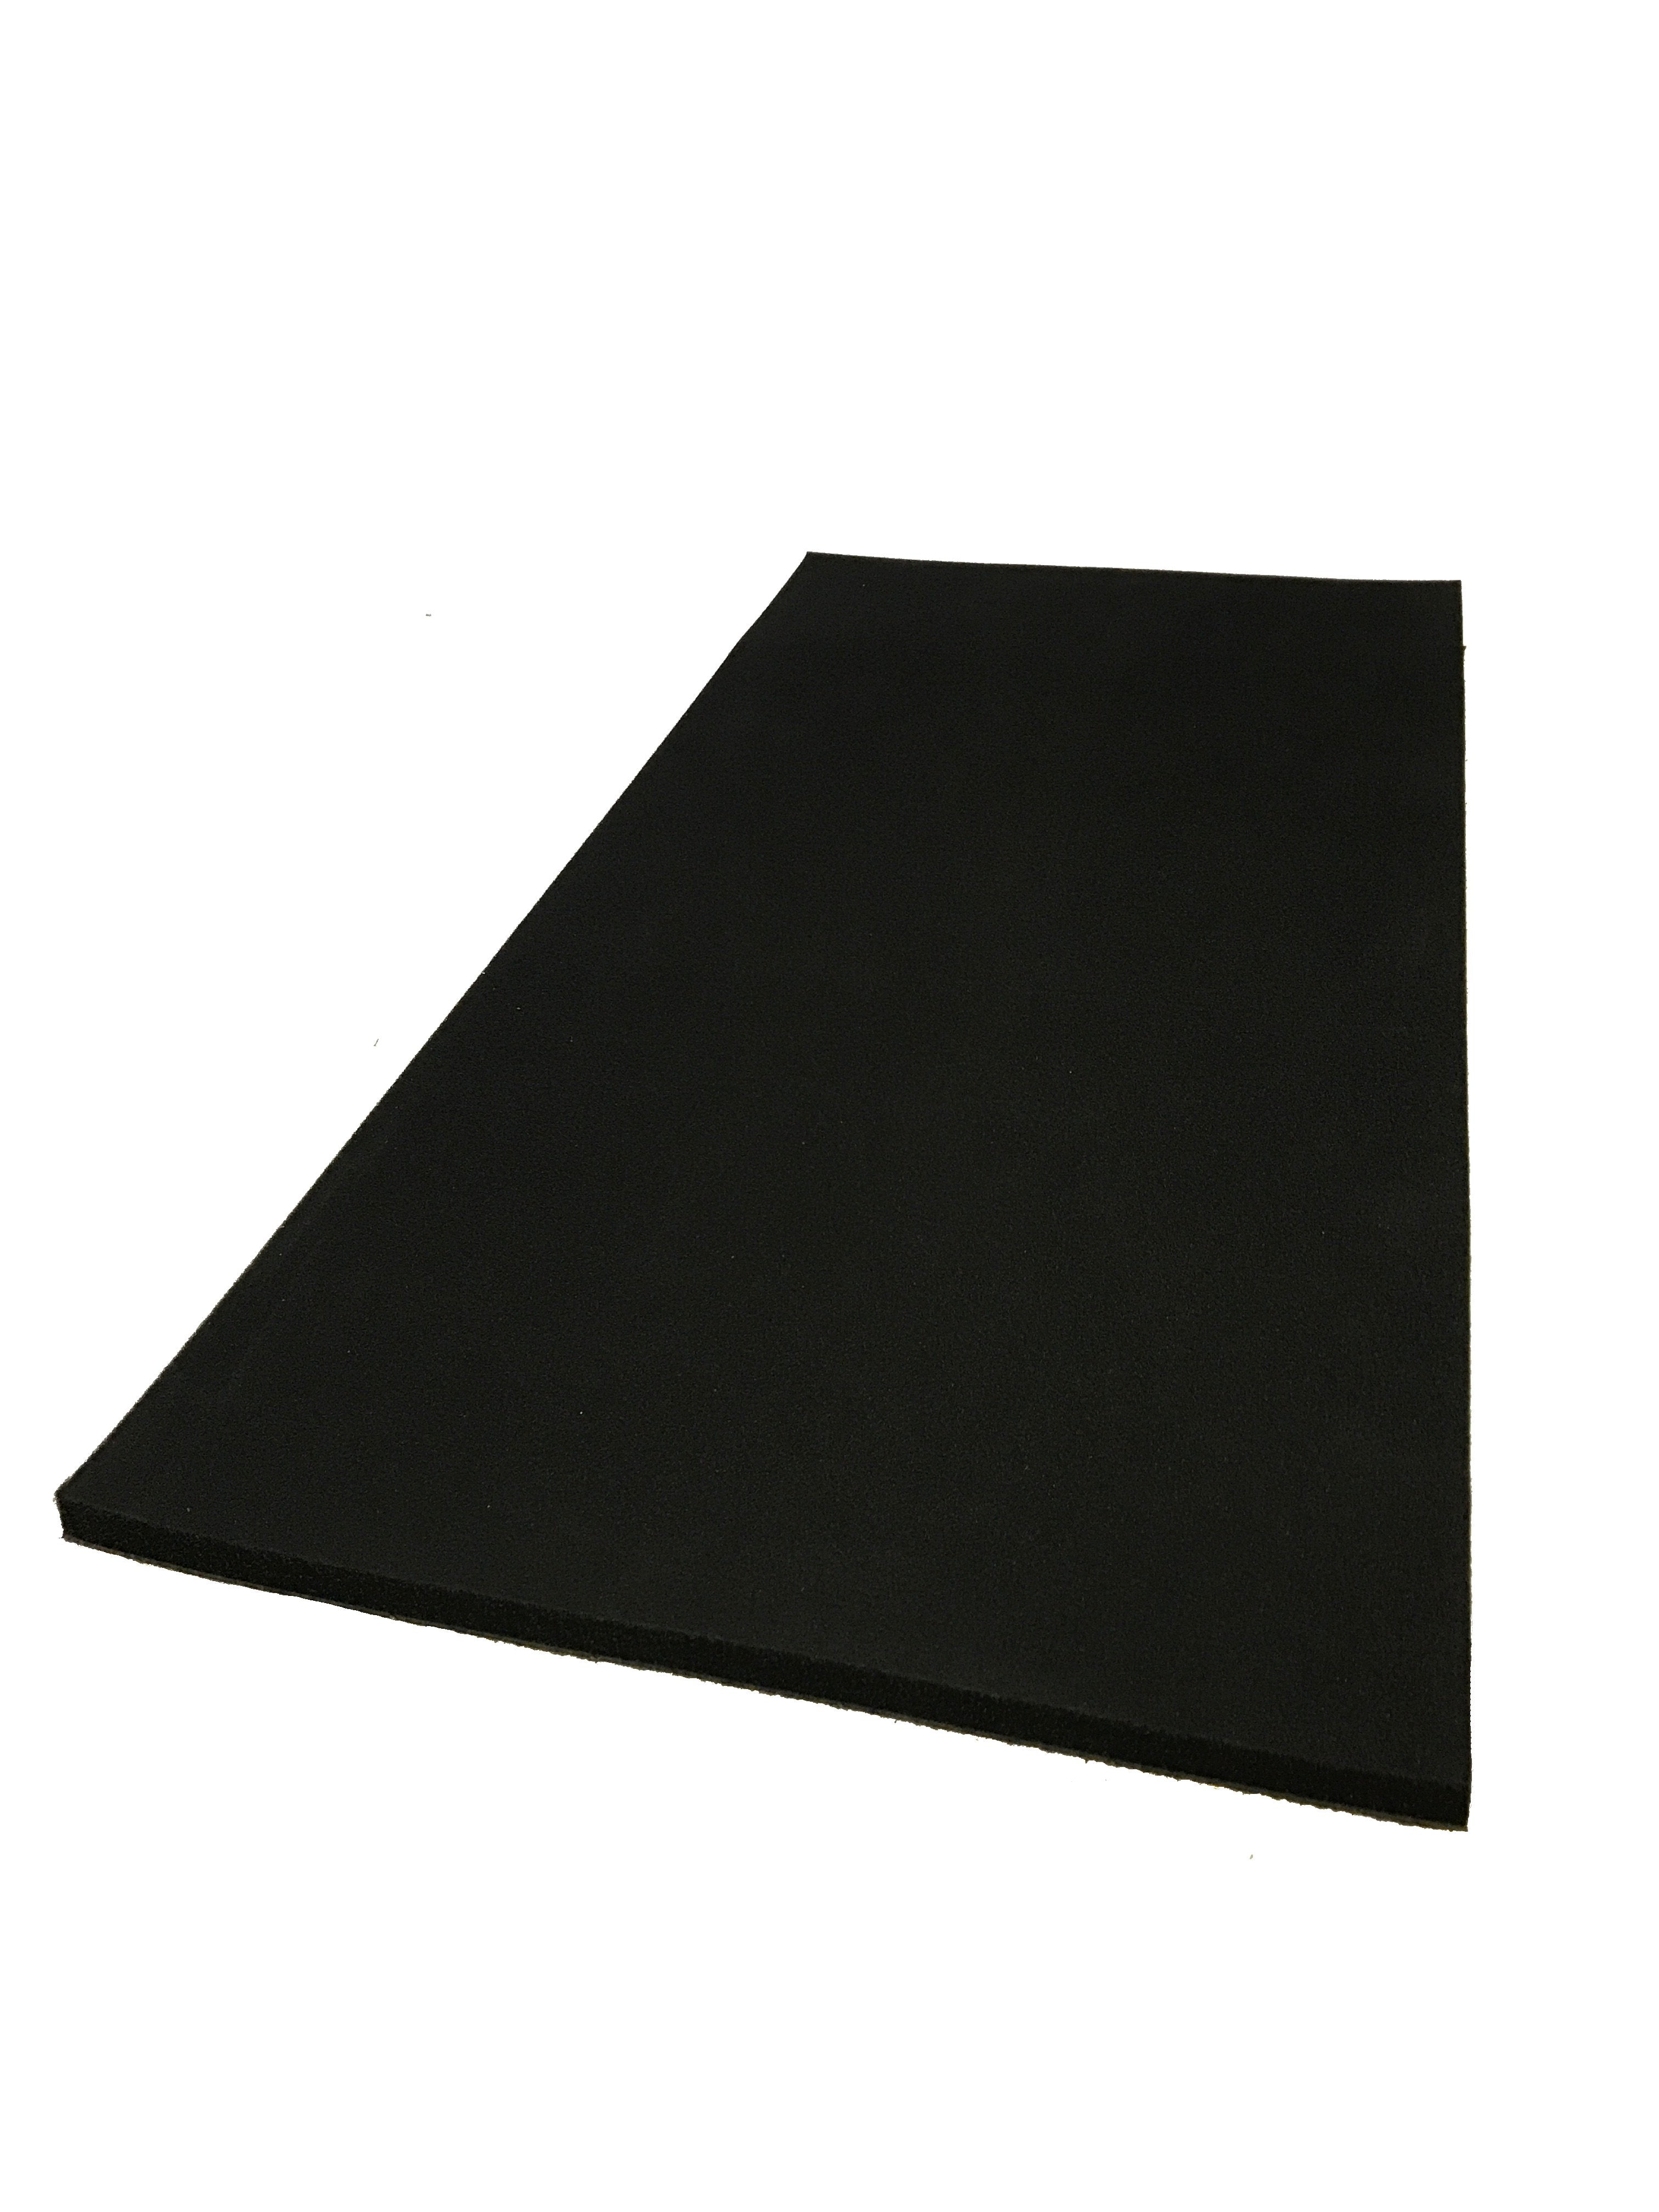 Silent Panel 5kg/25mm 600x1200- Barrier Foam Composite Acoustic Panel Adhesive Backed - Advanced Acoustics